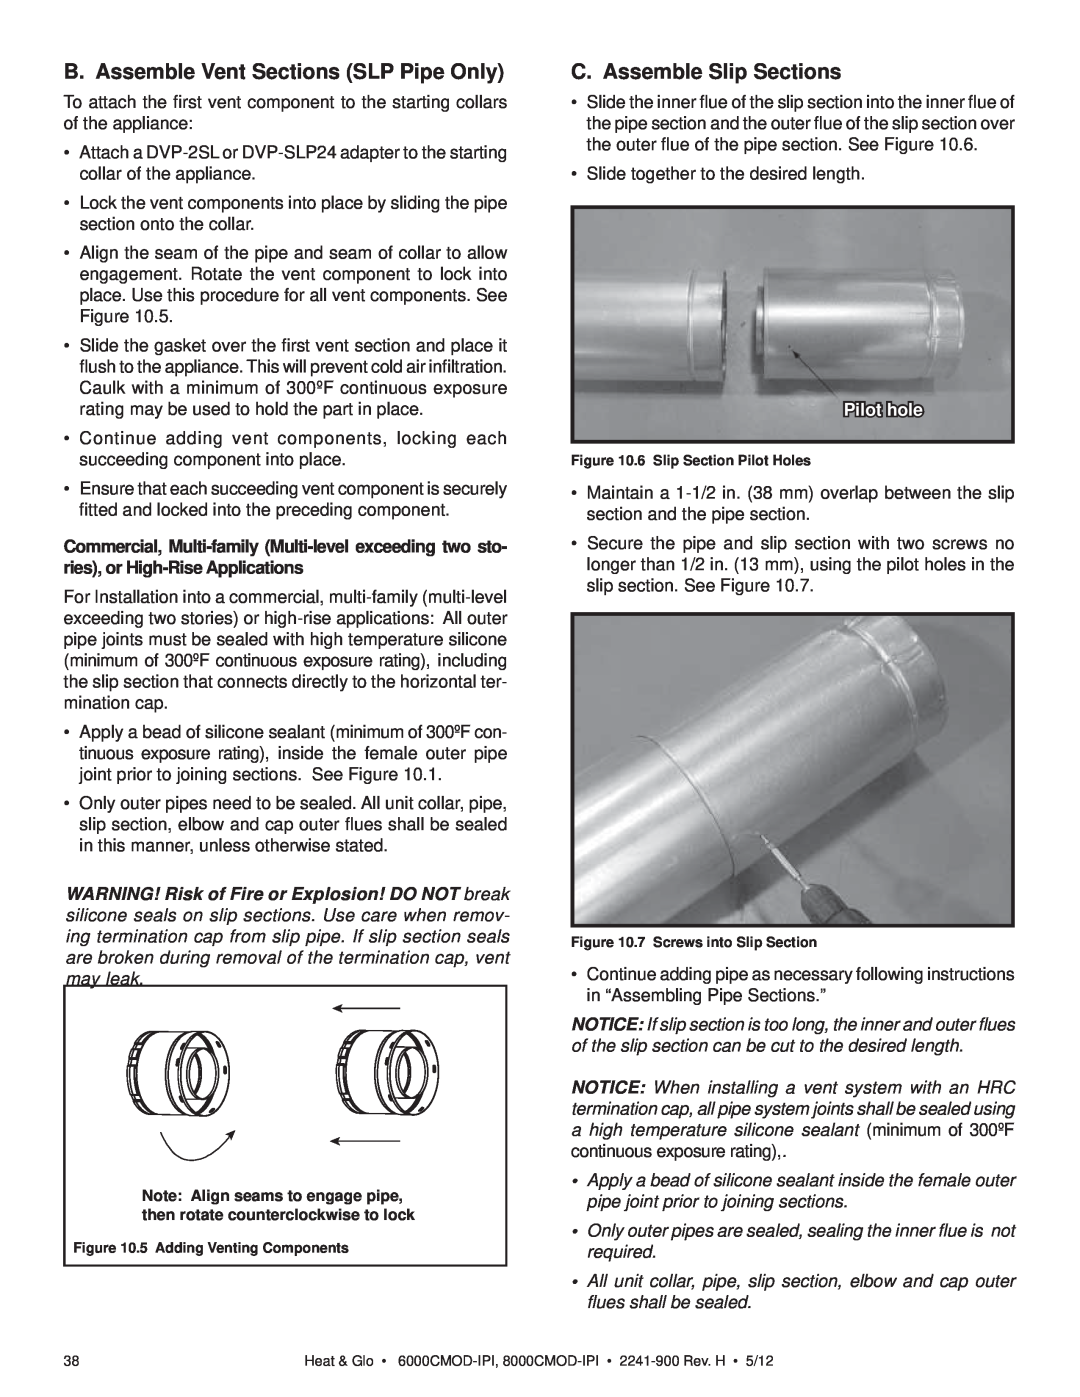 Heat & Glo LifeStyle 8000CMOD-IPI B. Assemble Vent Sections SLP Pipe Only, C. Assemble Slip Sections, Pilot hole 